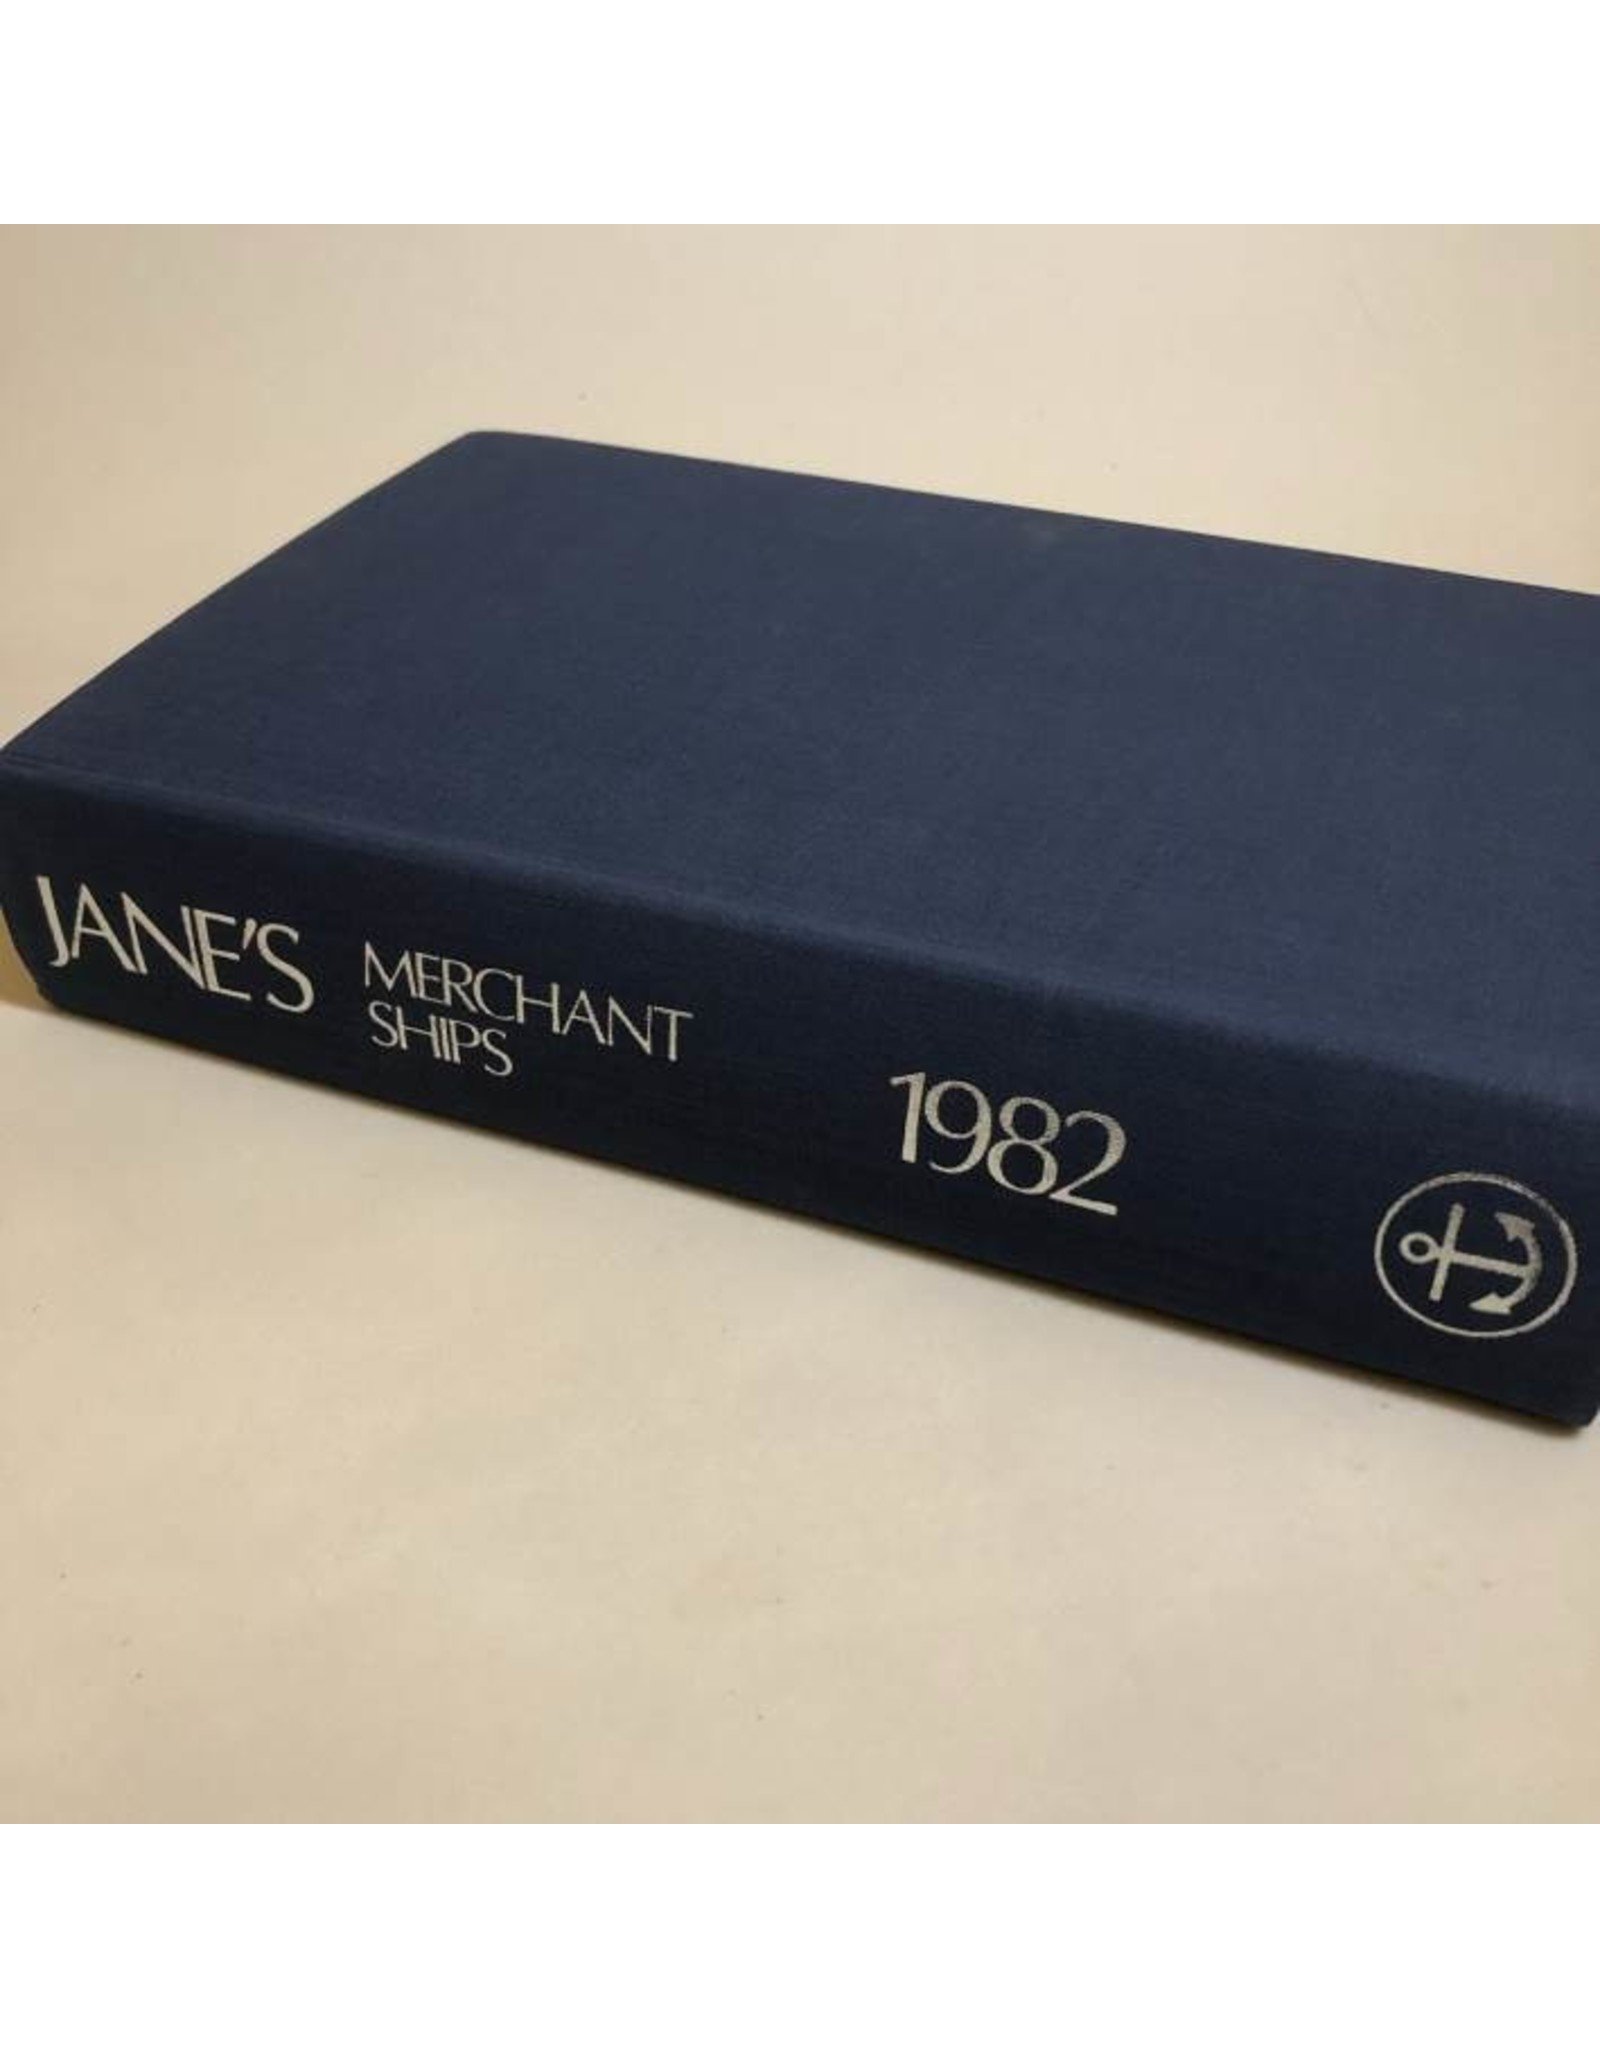 Hardcover book - Jane's Merchant Ships 1982